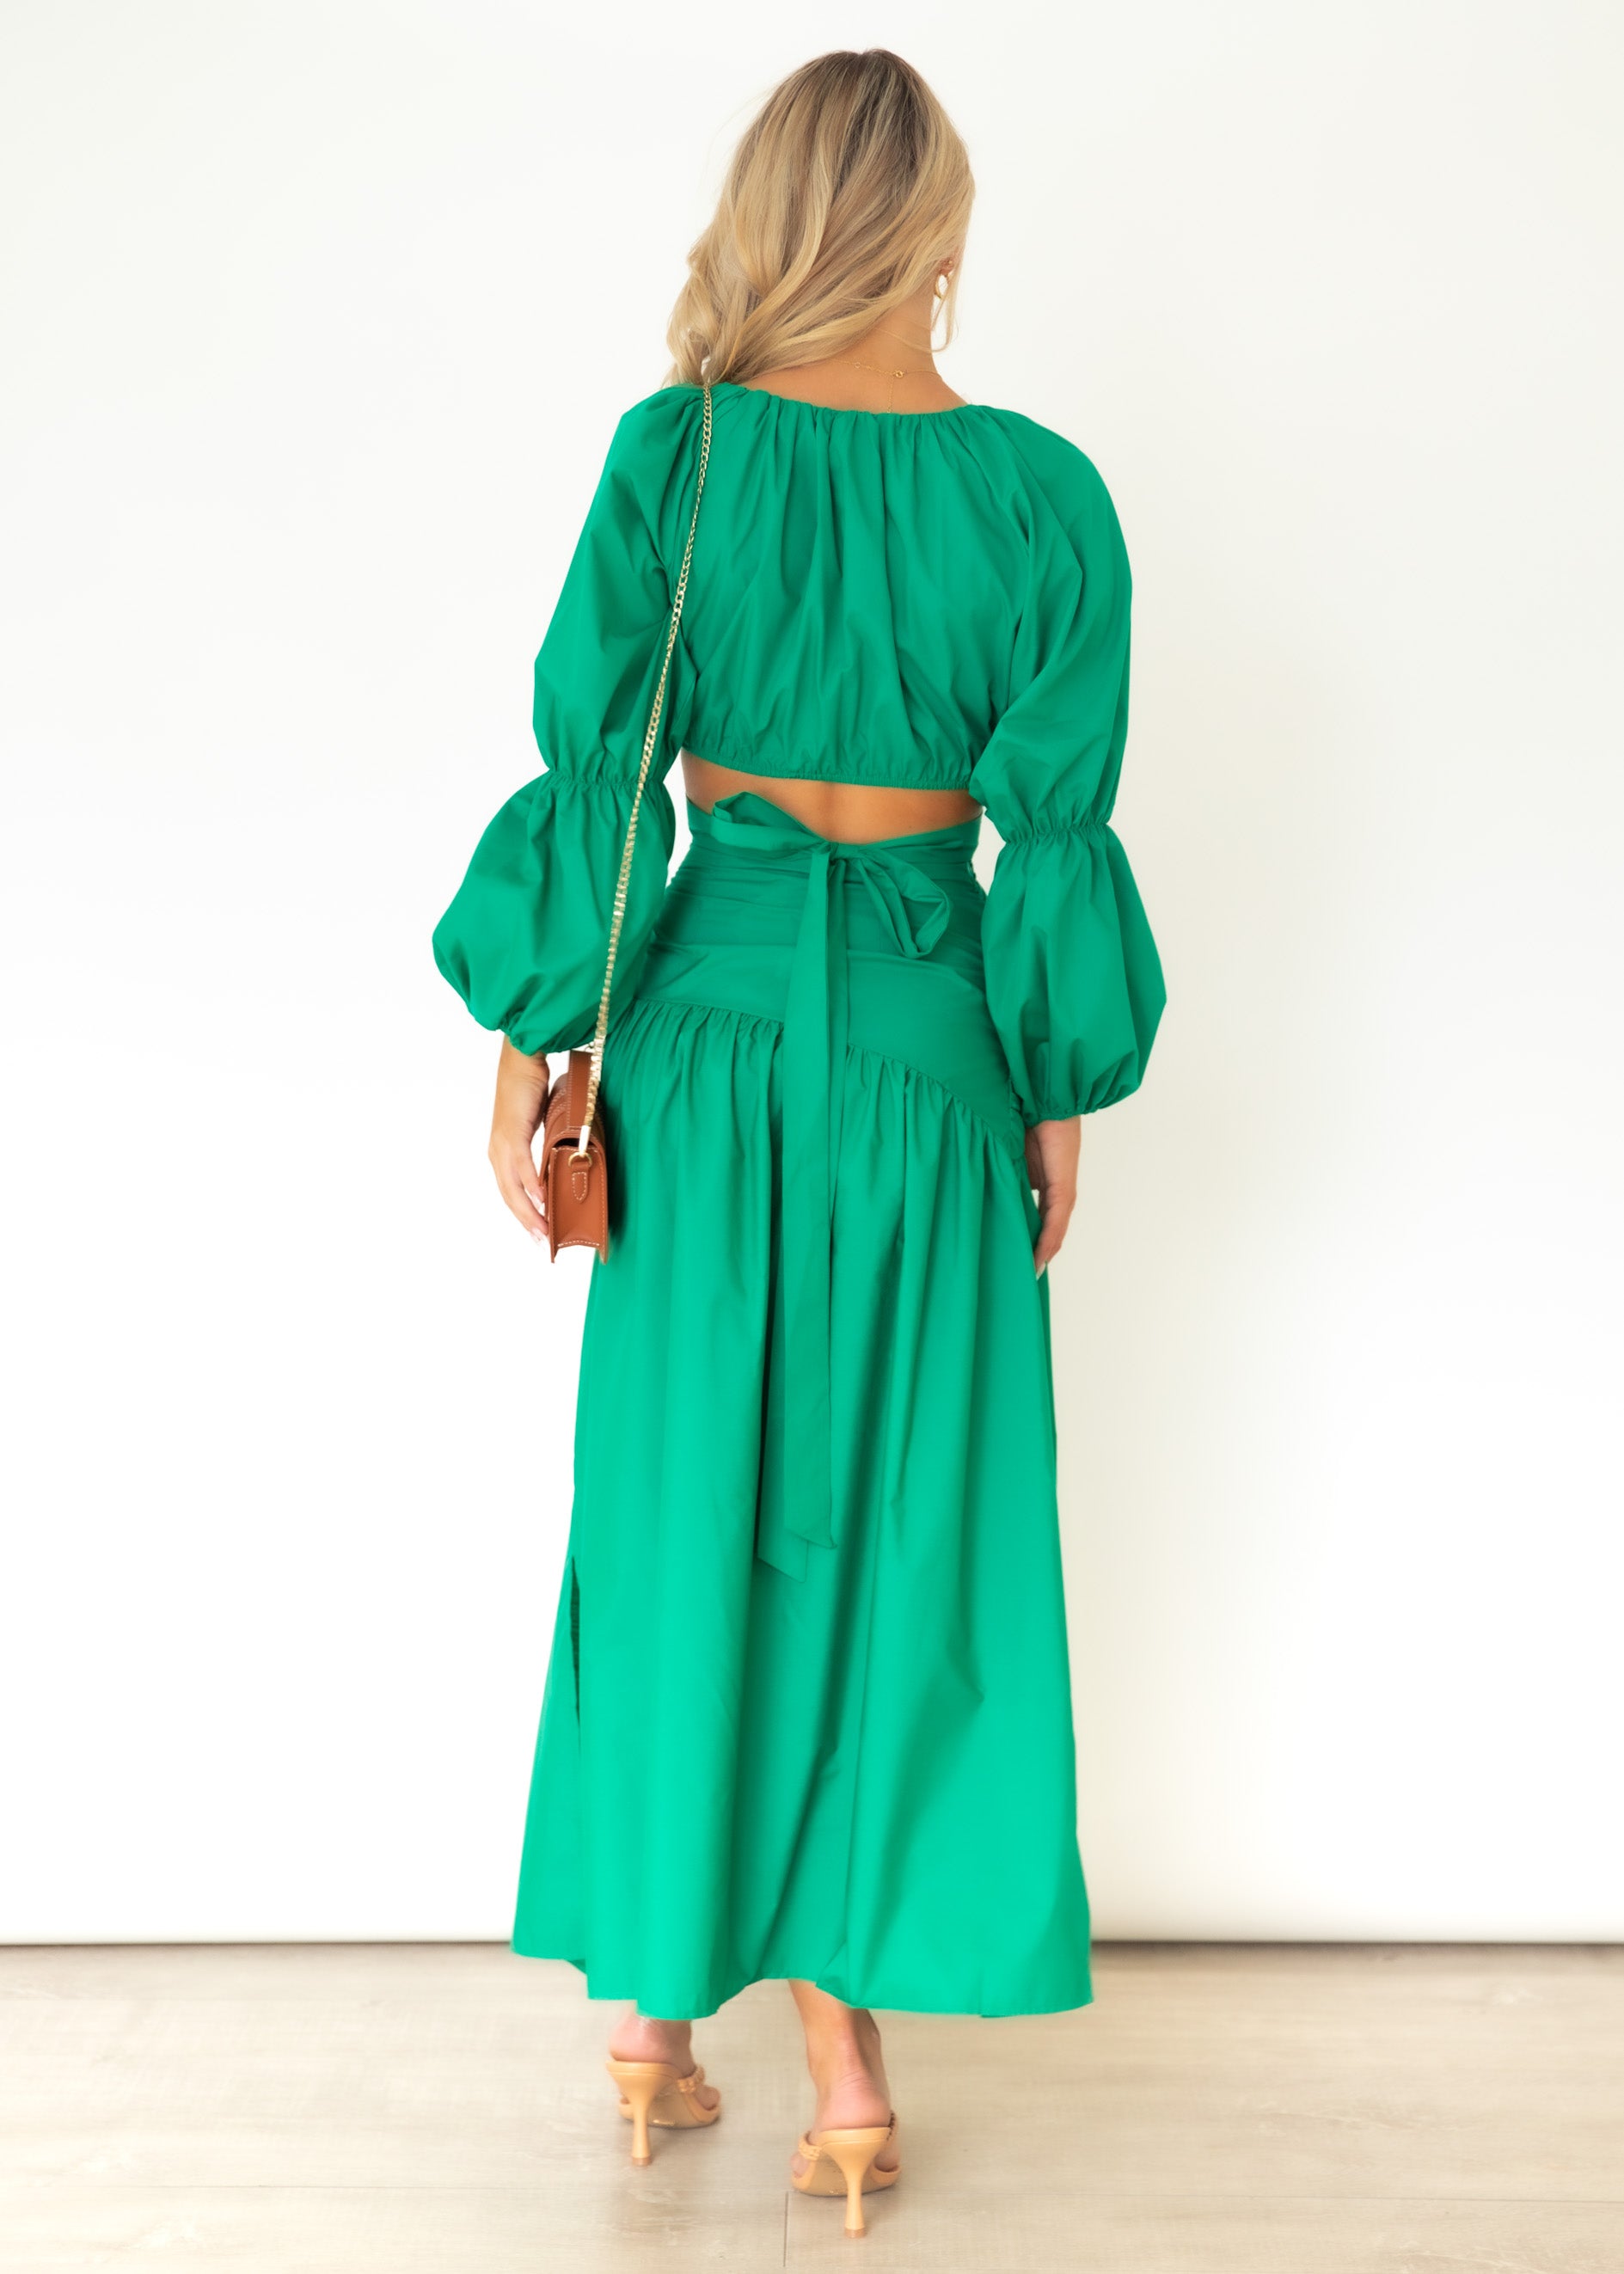 Kena Maxi Skirt - Green